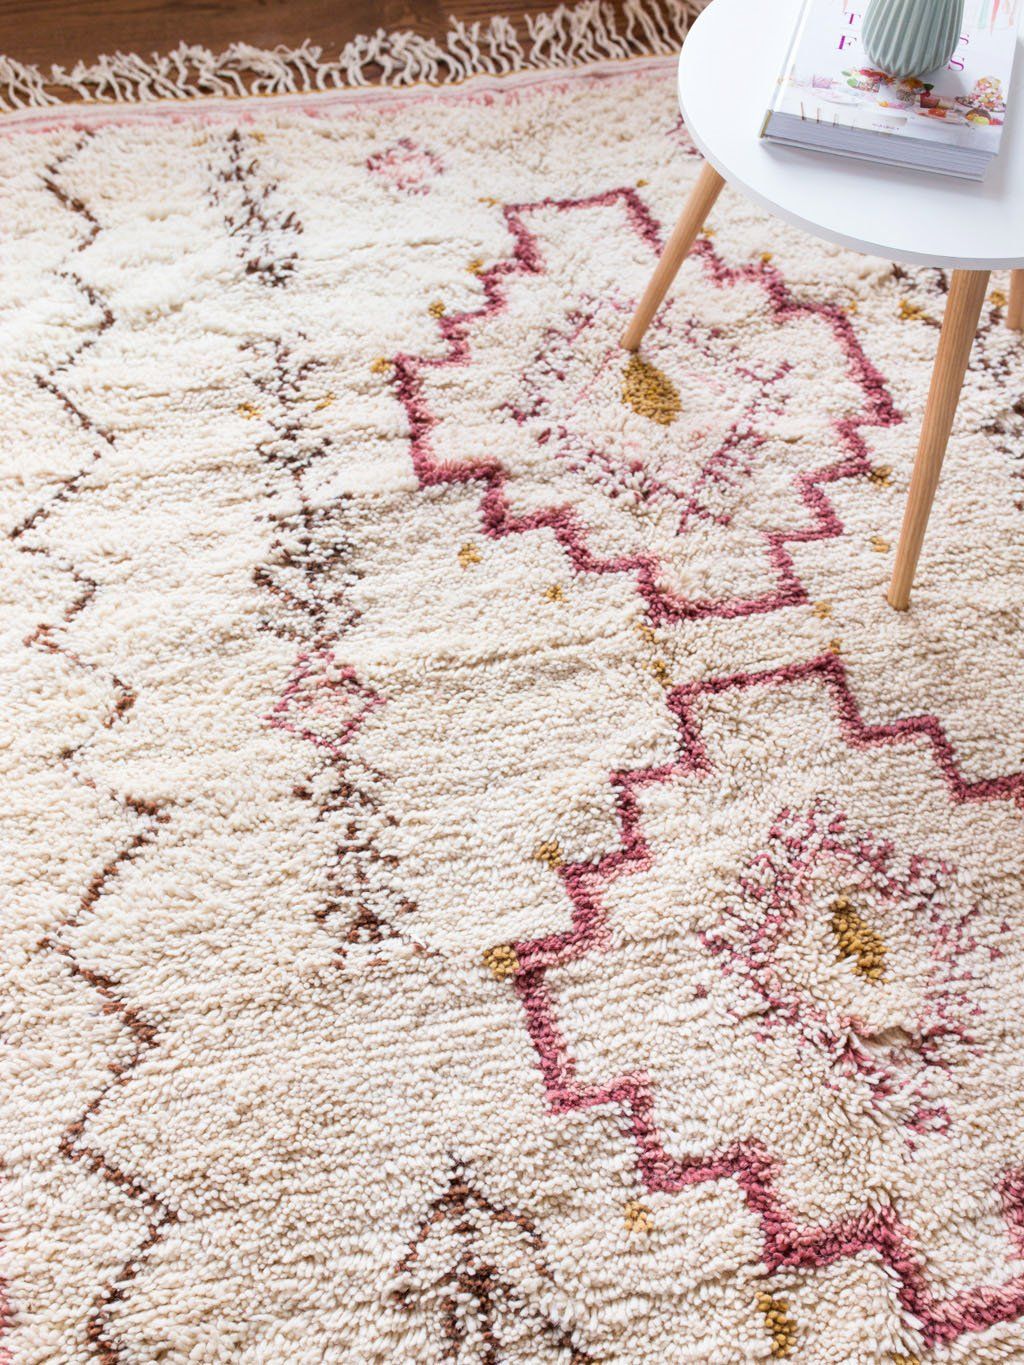 Leather shag rugs – a decent choice